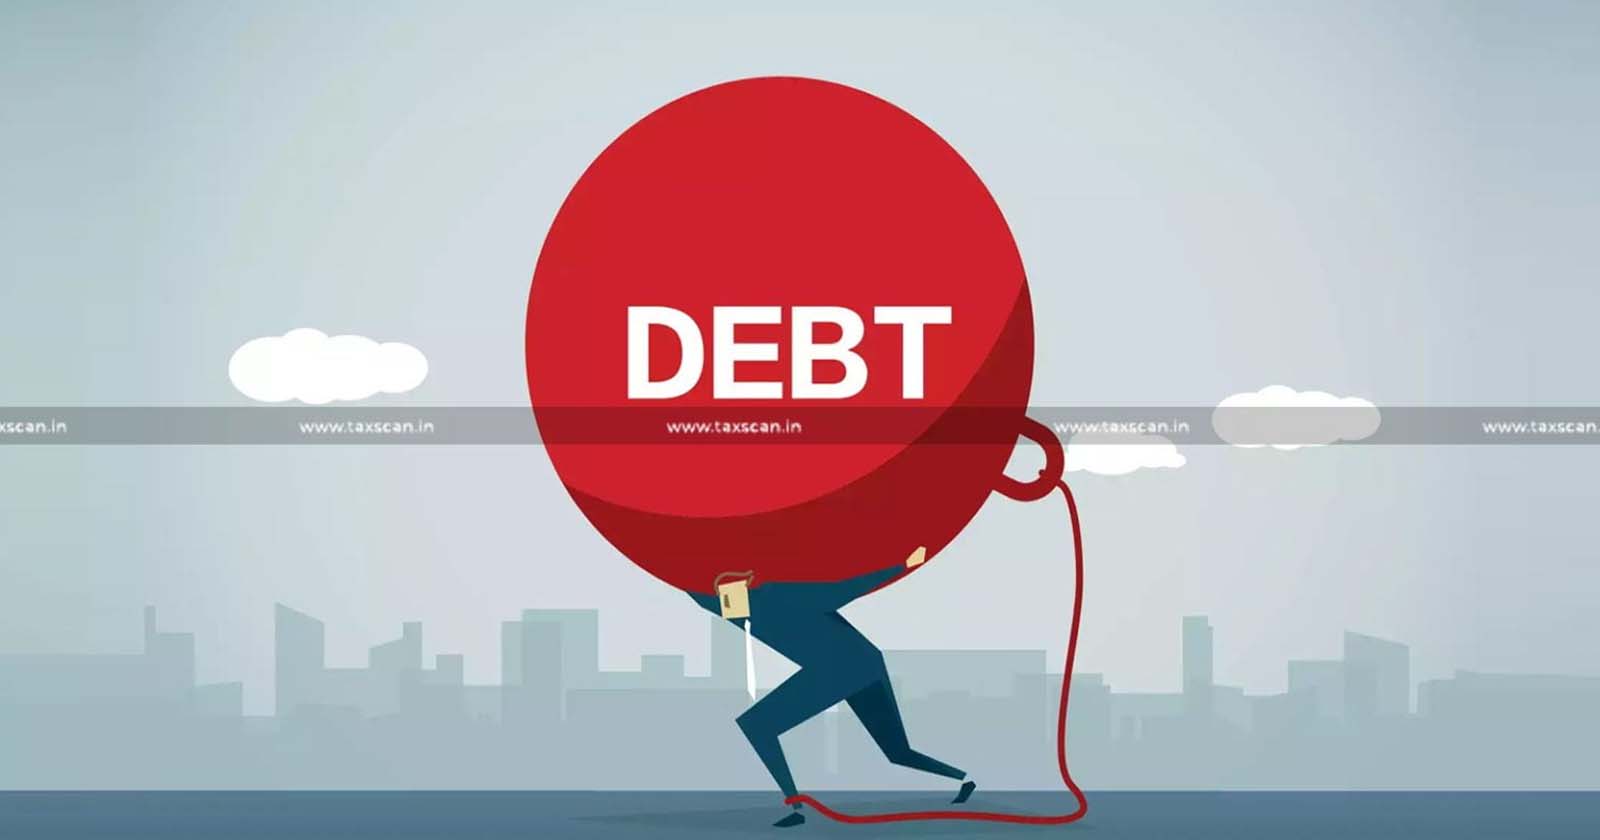 Corporate Debt - Finance Ministry notifies Guarantee Scheme - Finance Ministry - Guarantee Scheme - Corporate Debt to cover guarantee - debt - CDMDF - taxscan